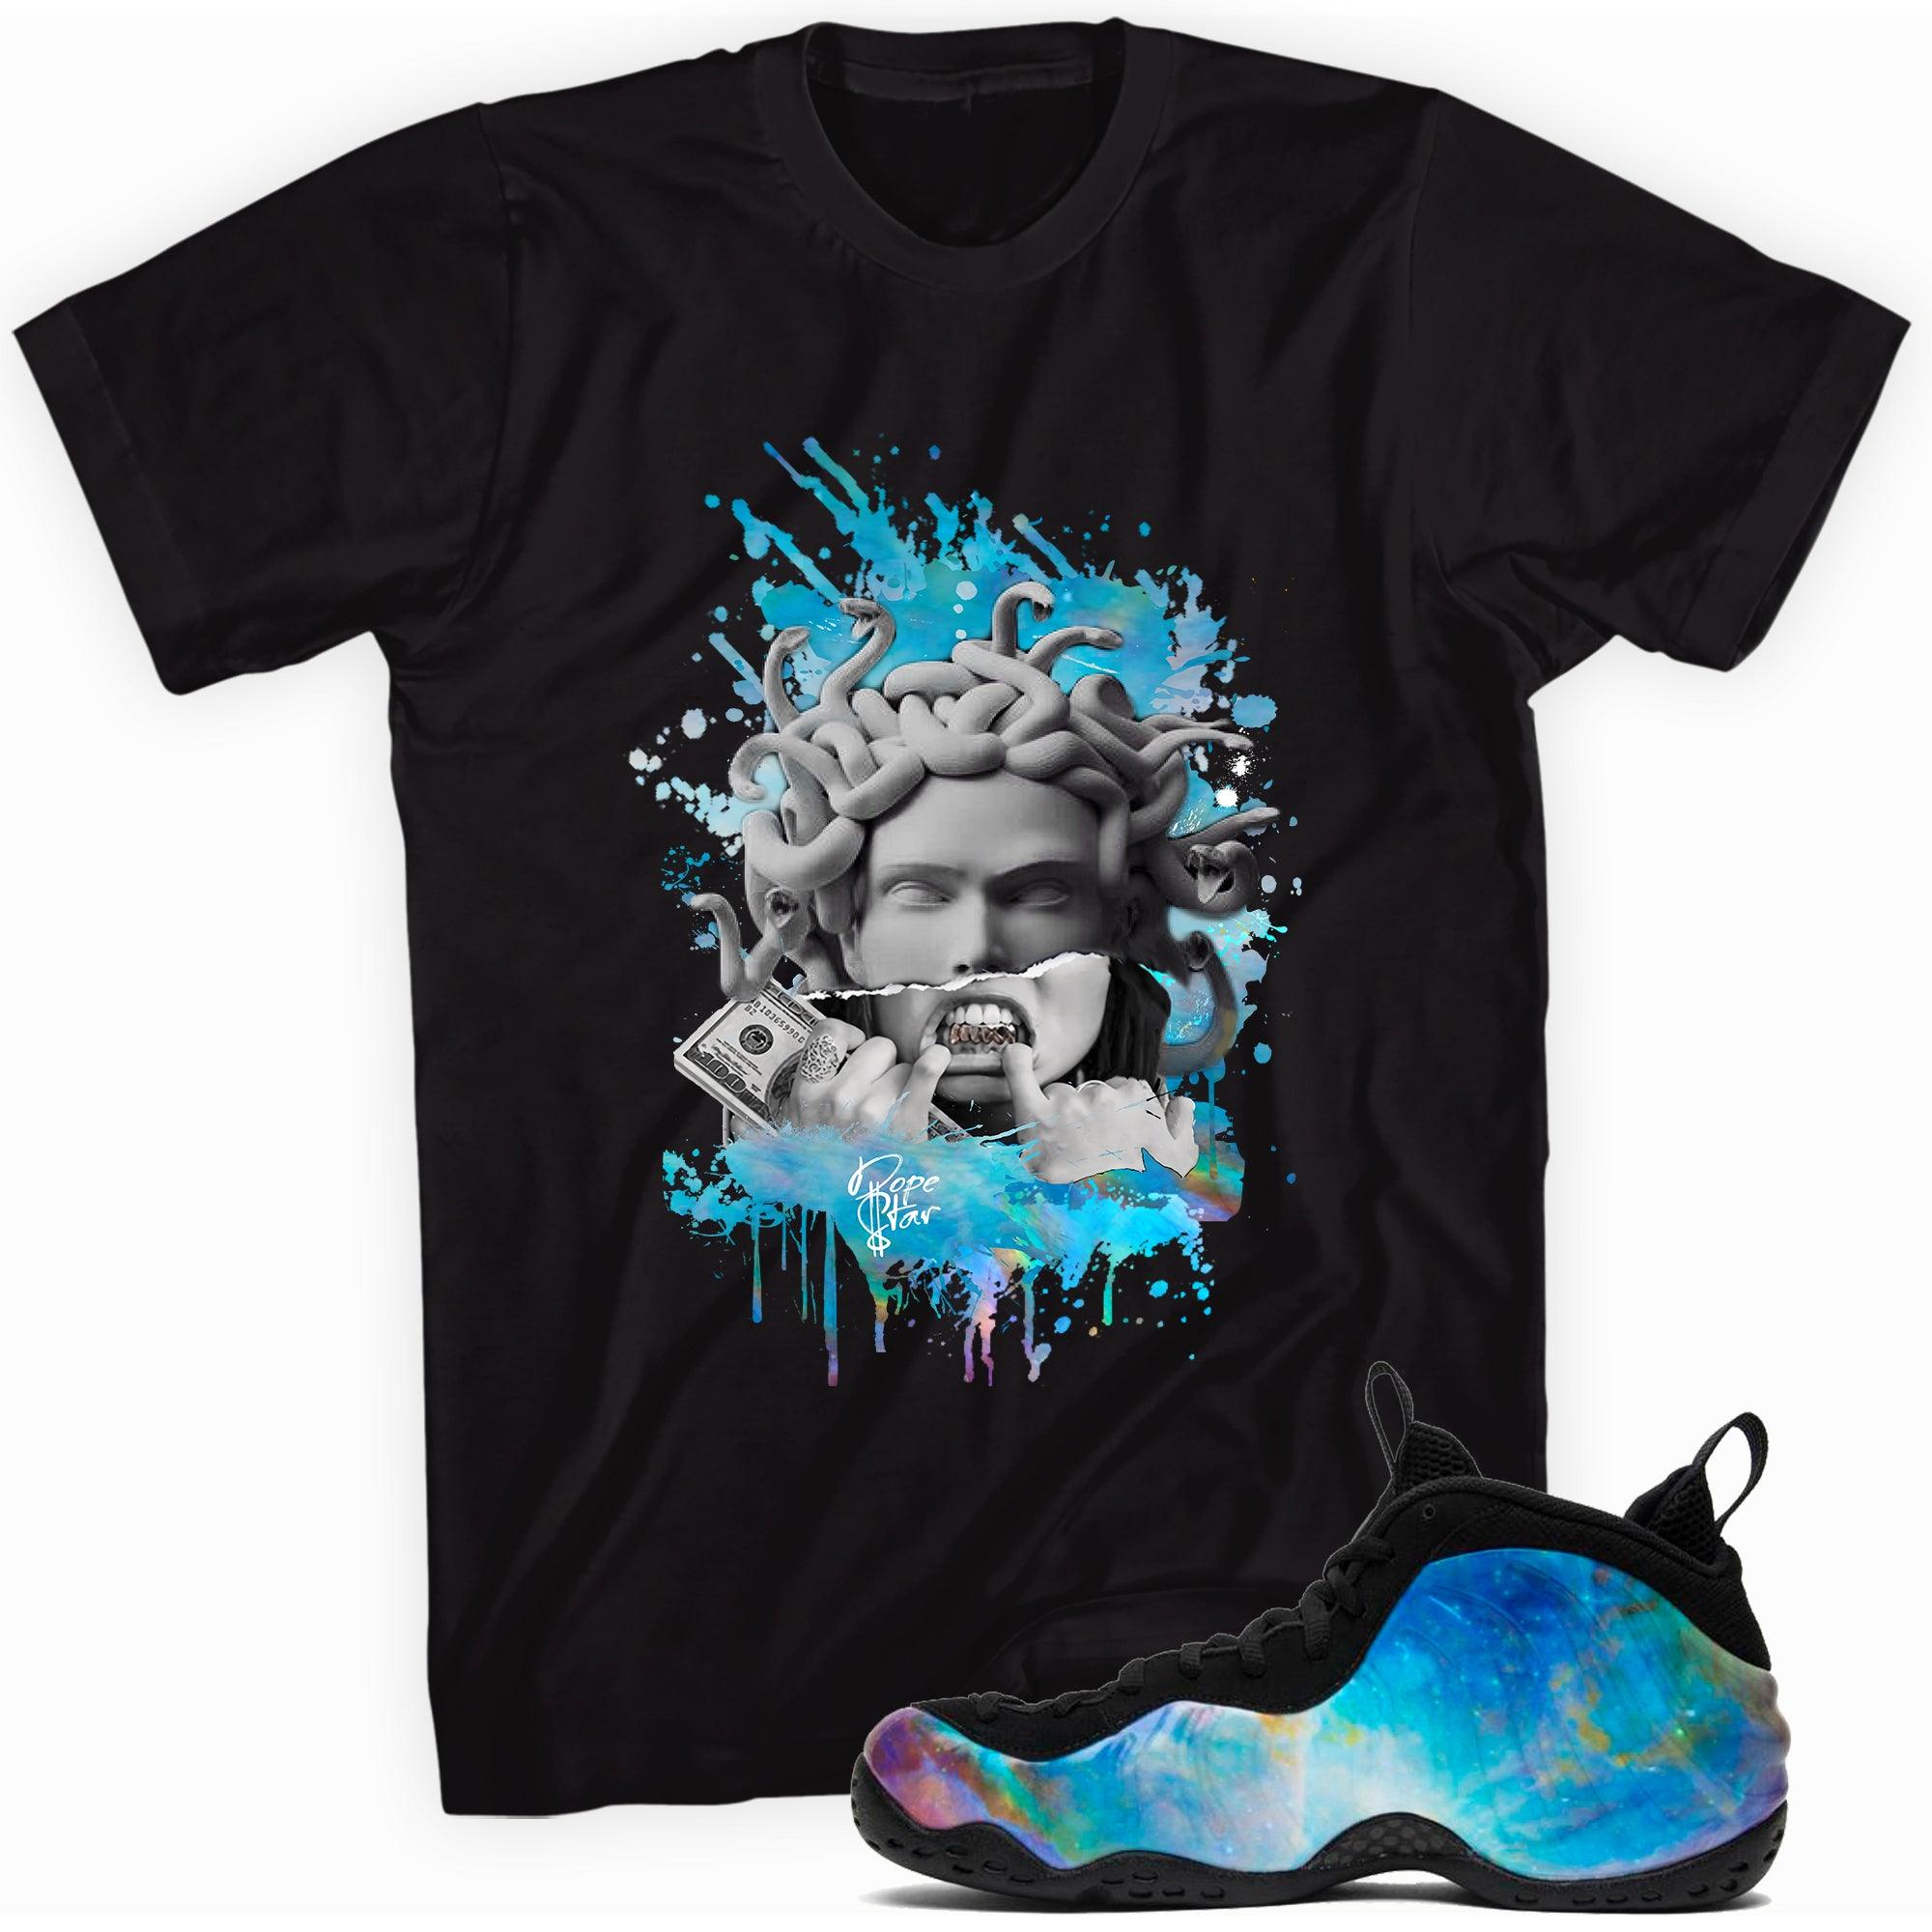 Black Medusa Shirt Nike Little Posite One Big Bang photo